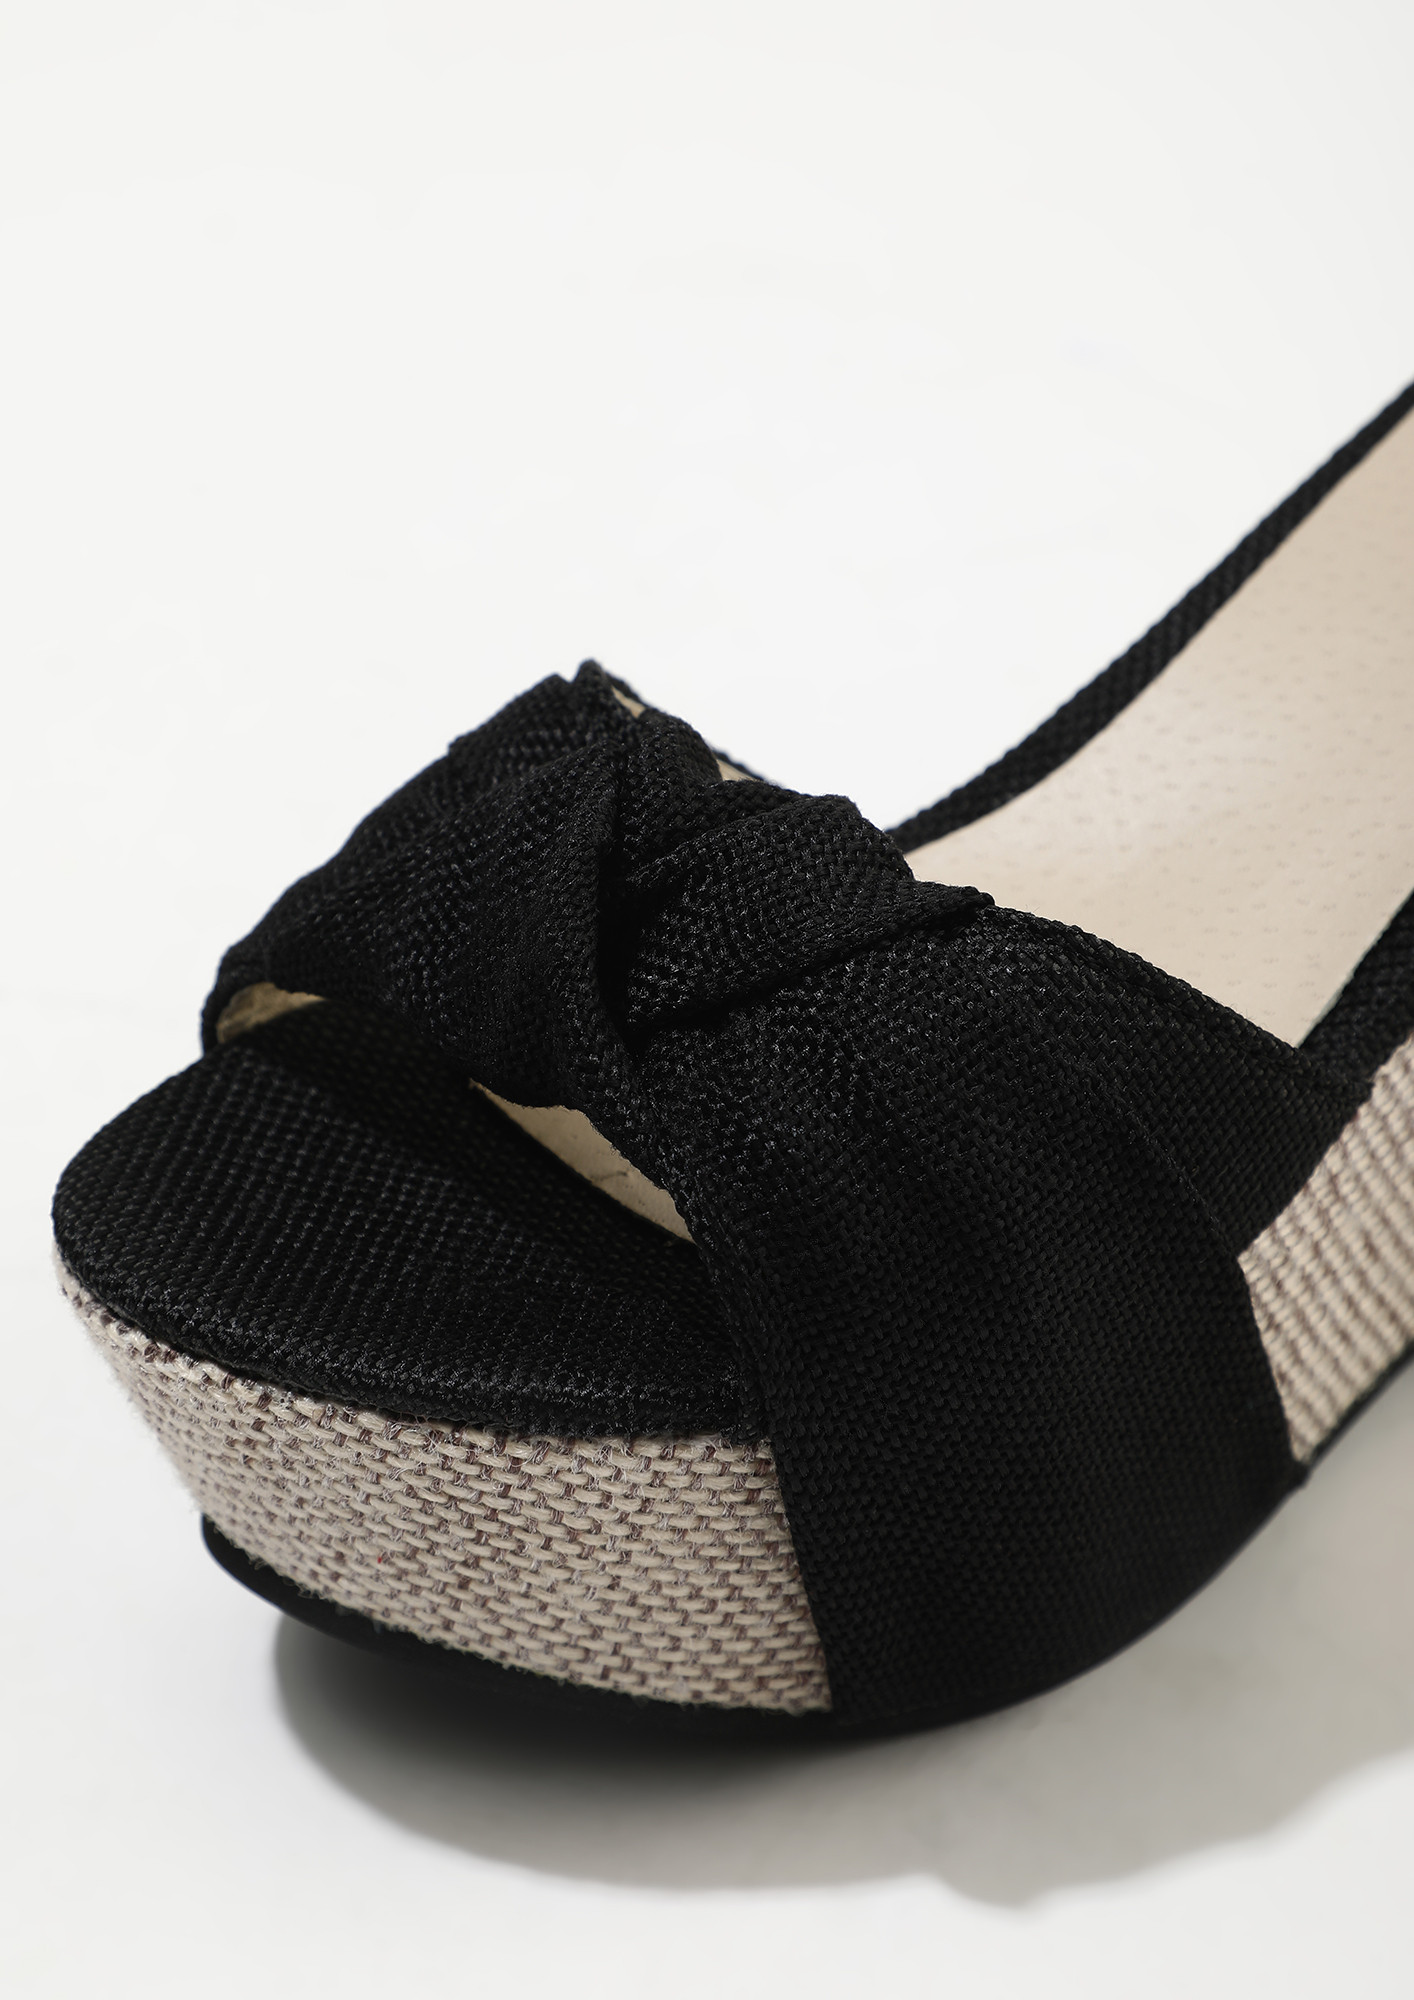 Women Peep Toe Sandals Ankle Strap Mid Heels Chunky Platform Summer Casual  Shoes | eBay